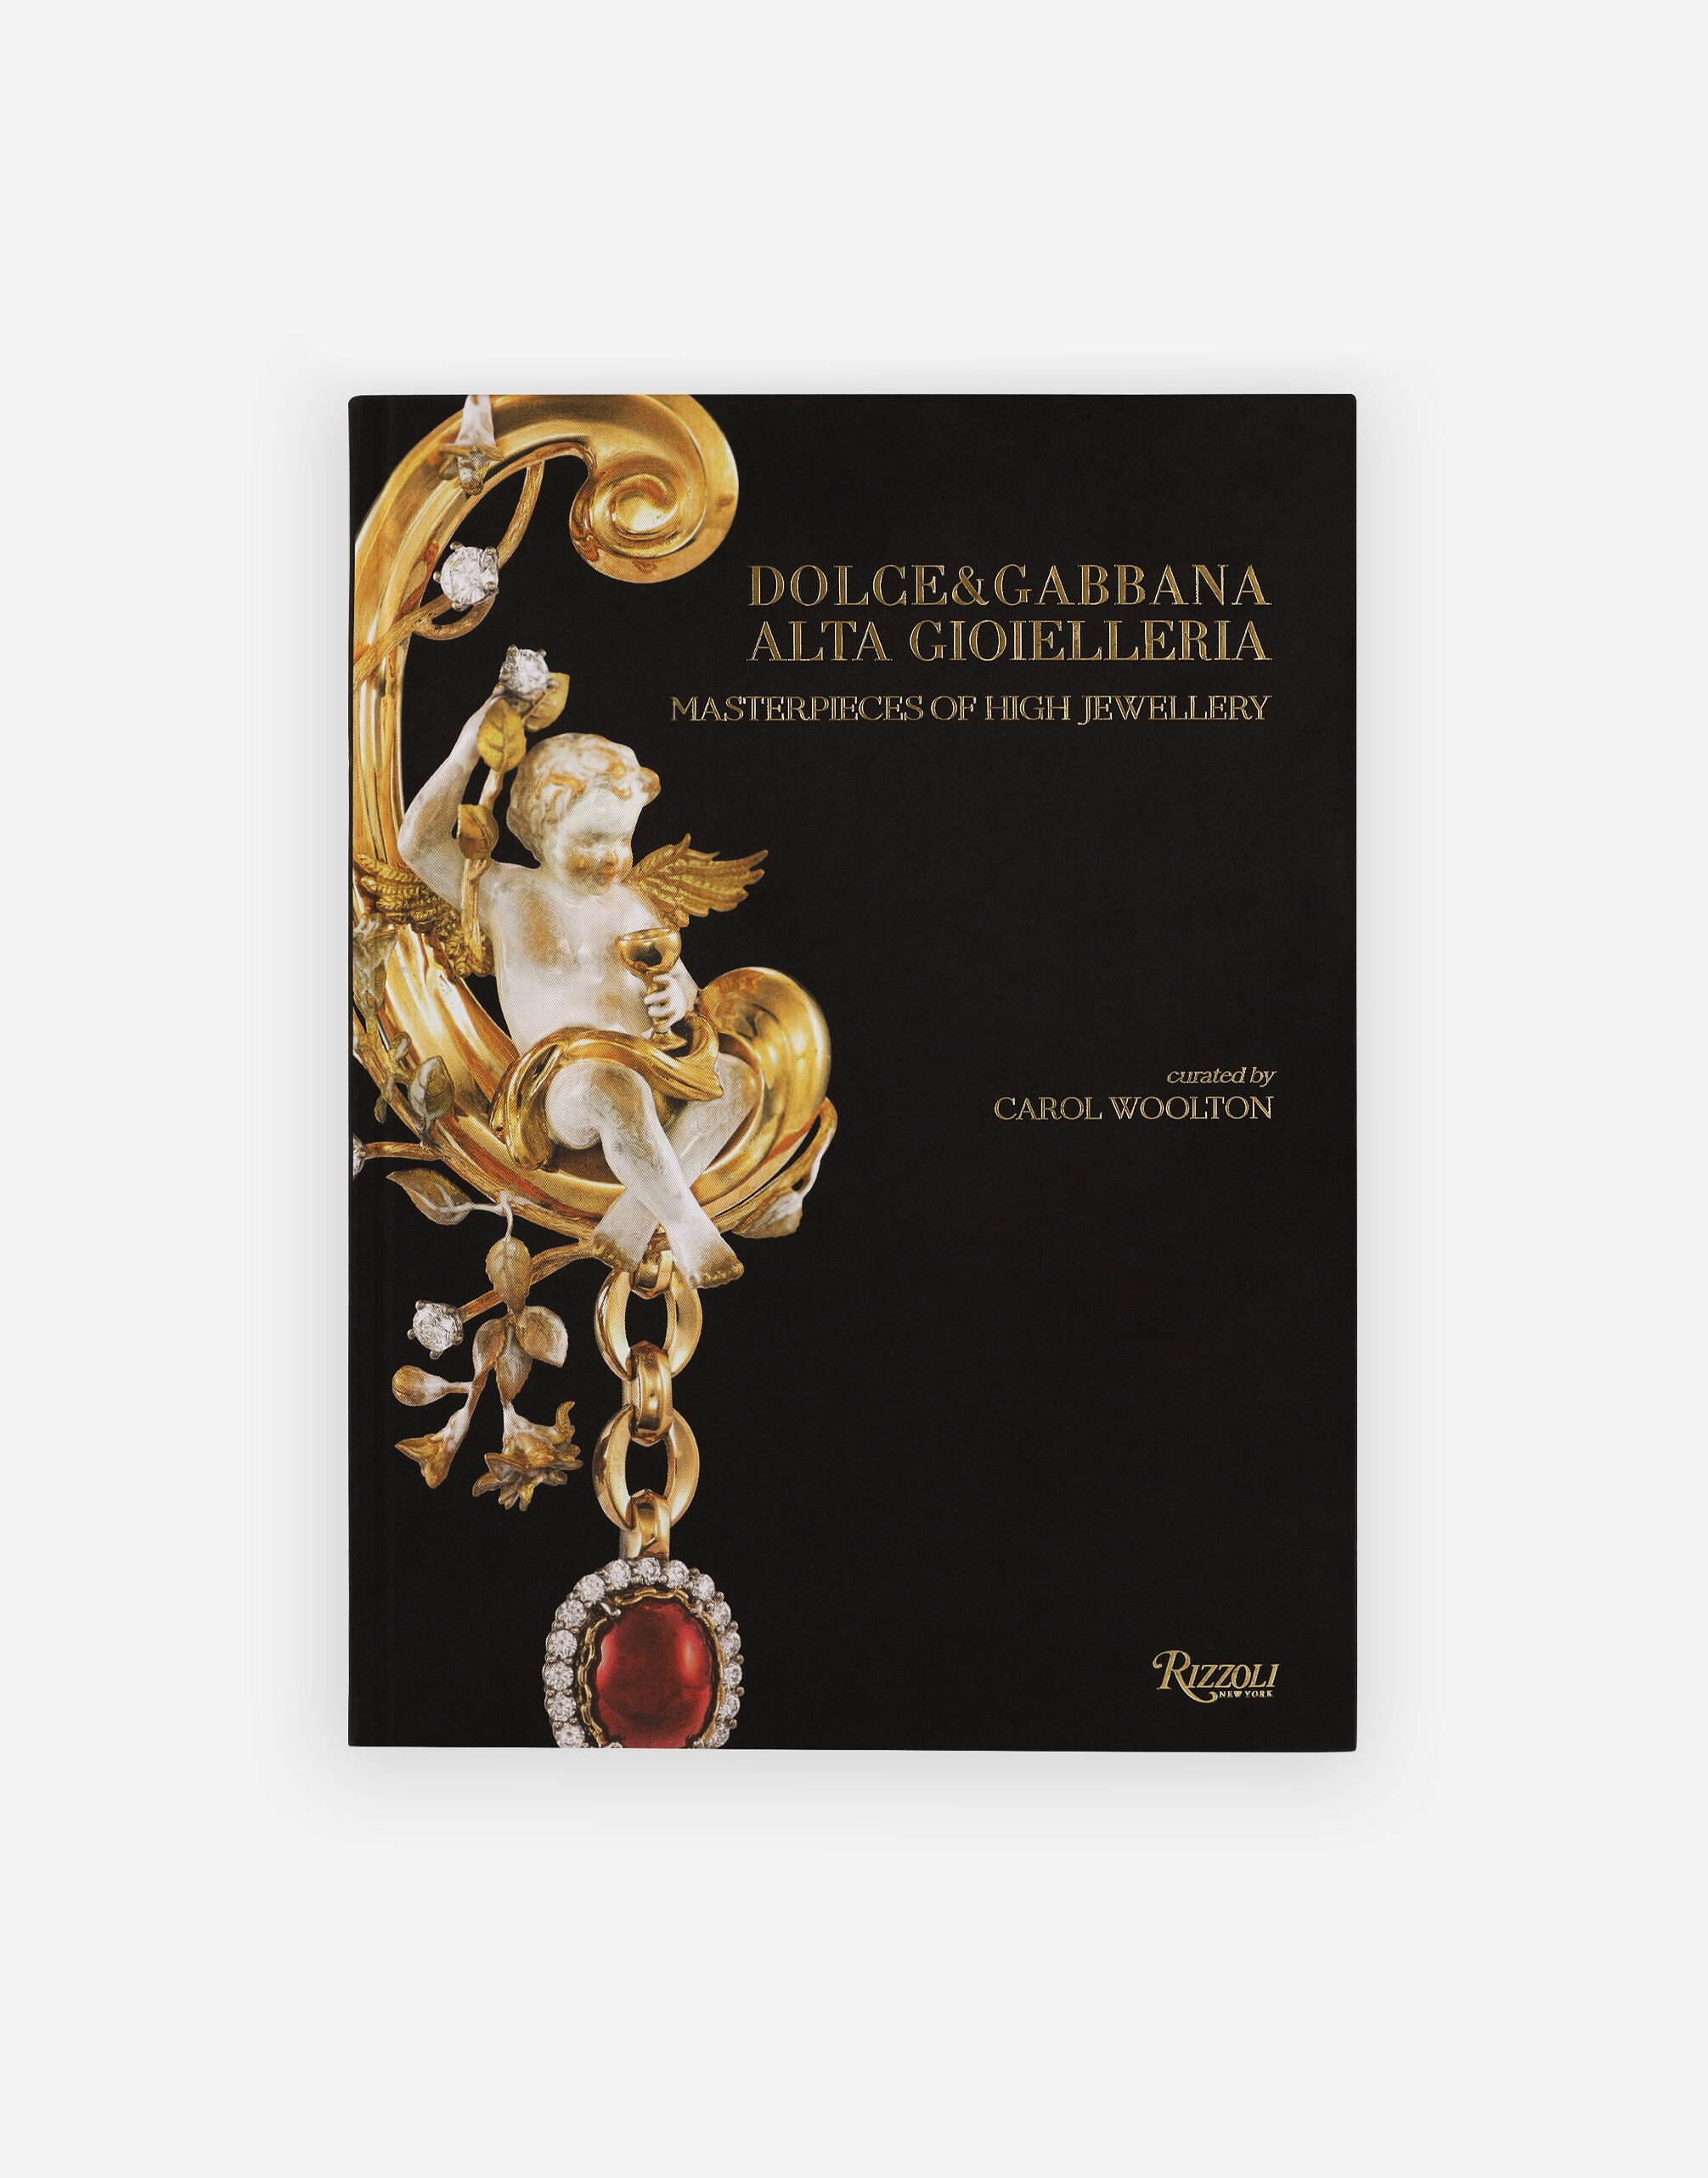 Dolce & Gabbana Dolce & Gabbana Alta Gioielleria: Masterpieces of High Jewellery Multicolor VL1137VLTW2